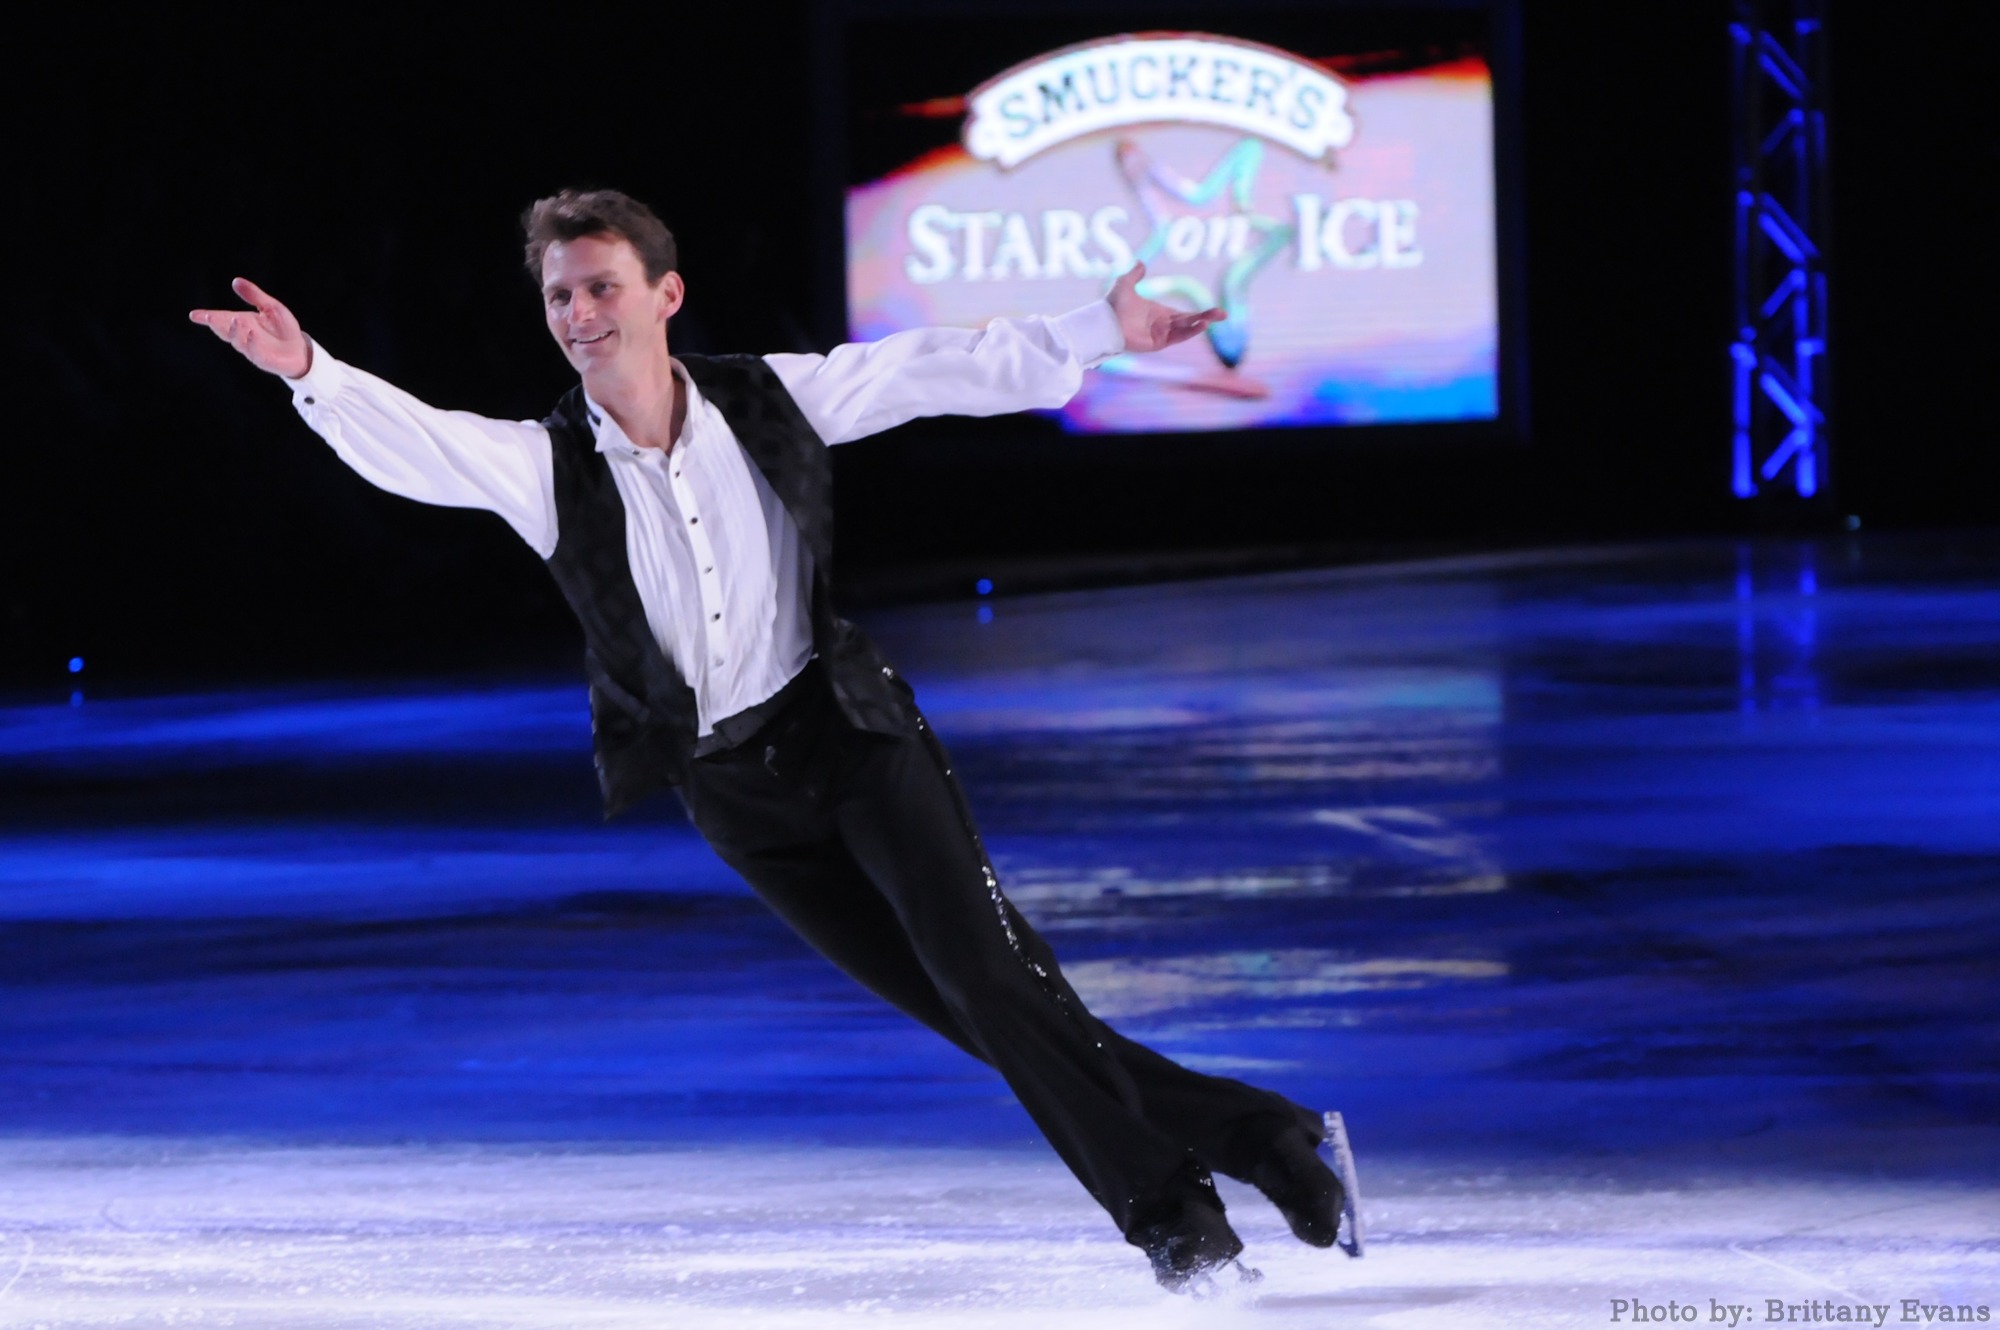 Todd Eldredge - Stars on Ice tour 2011